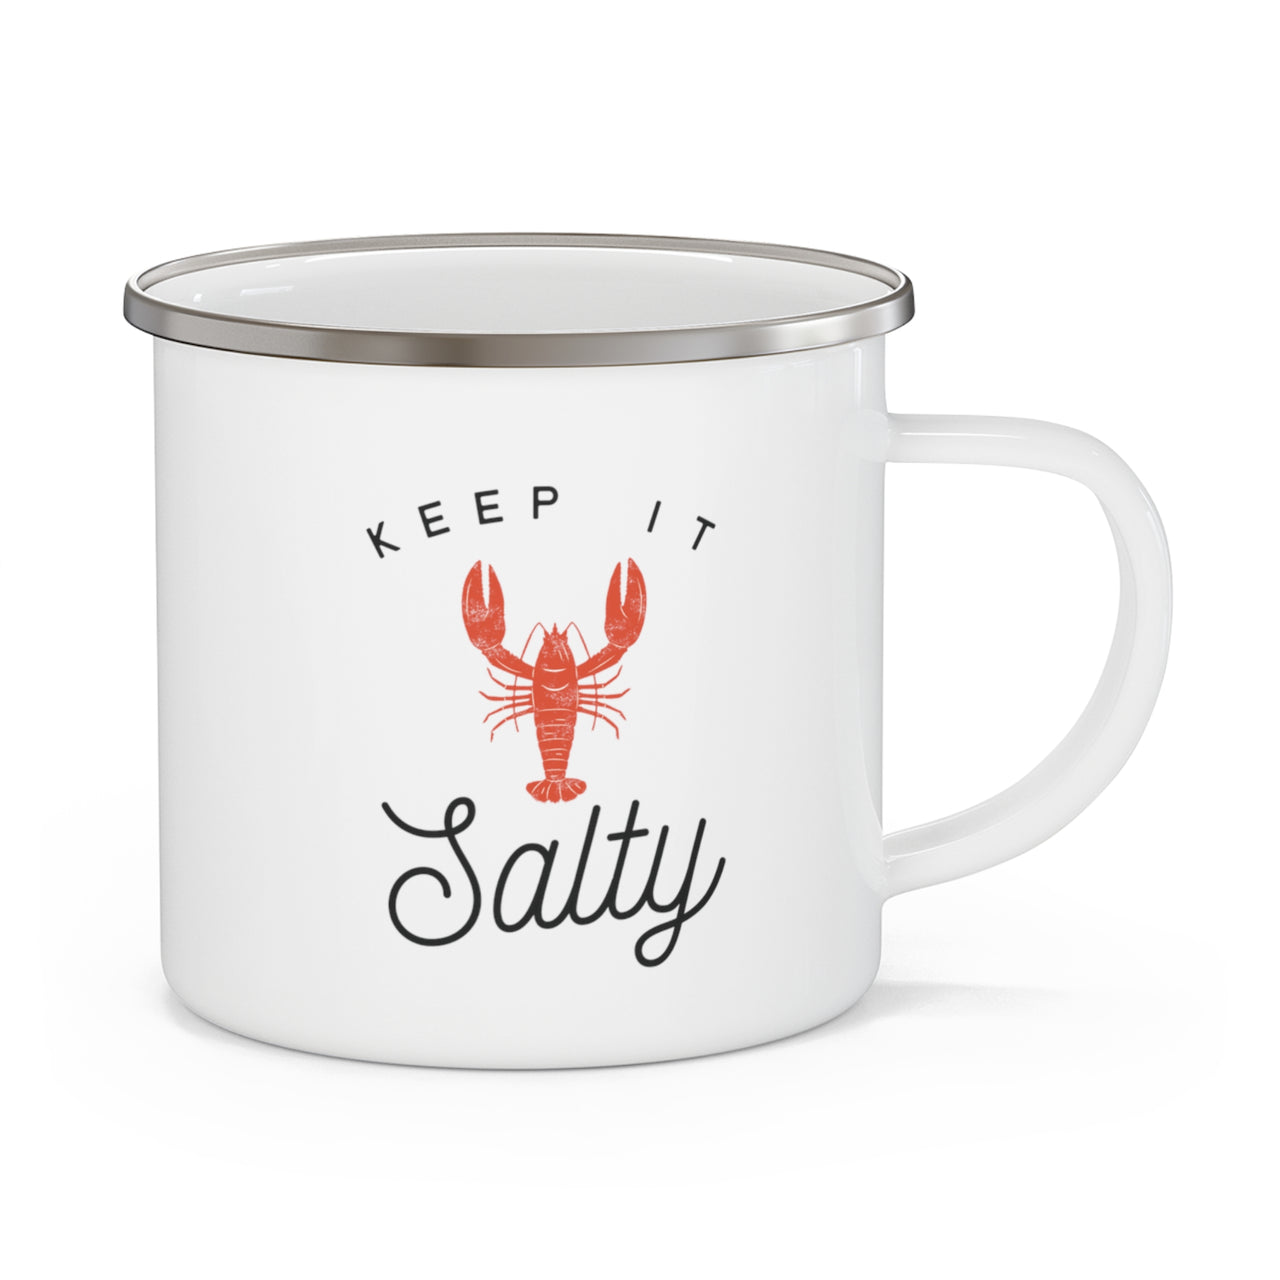 Keep It Salty White Enamel Stainless Steel Mug, 12 oz